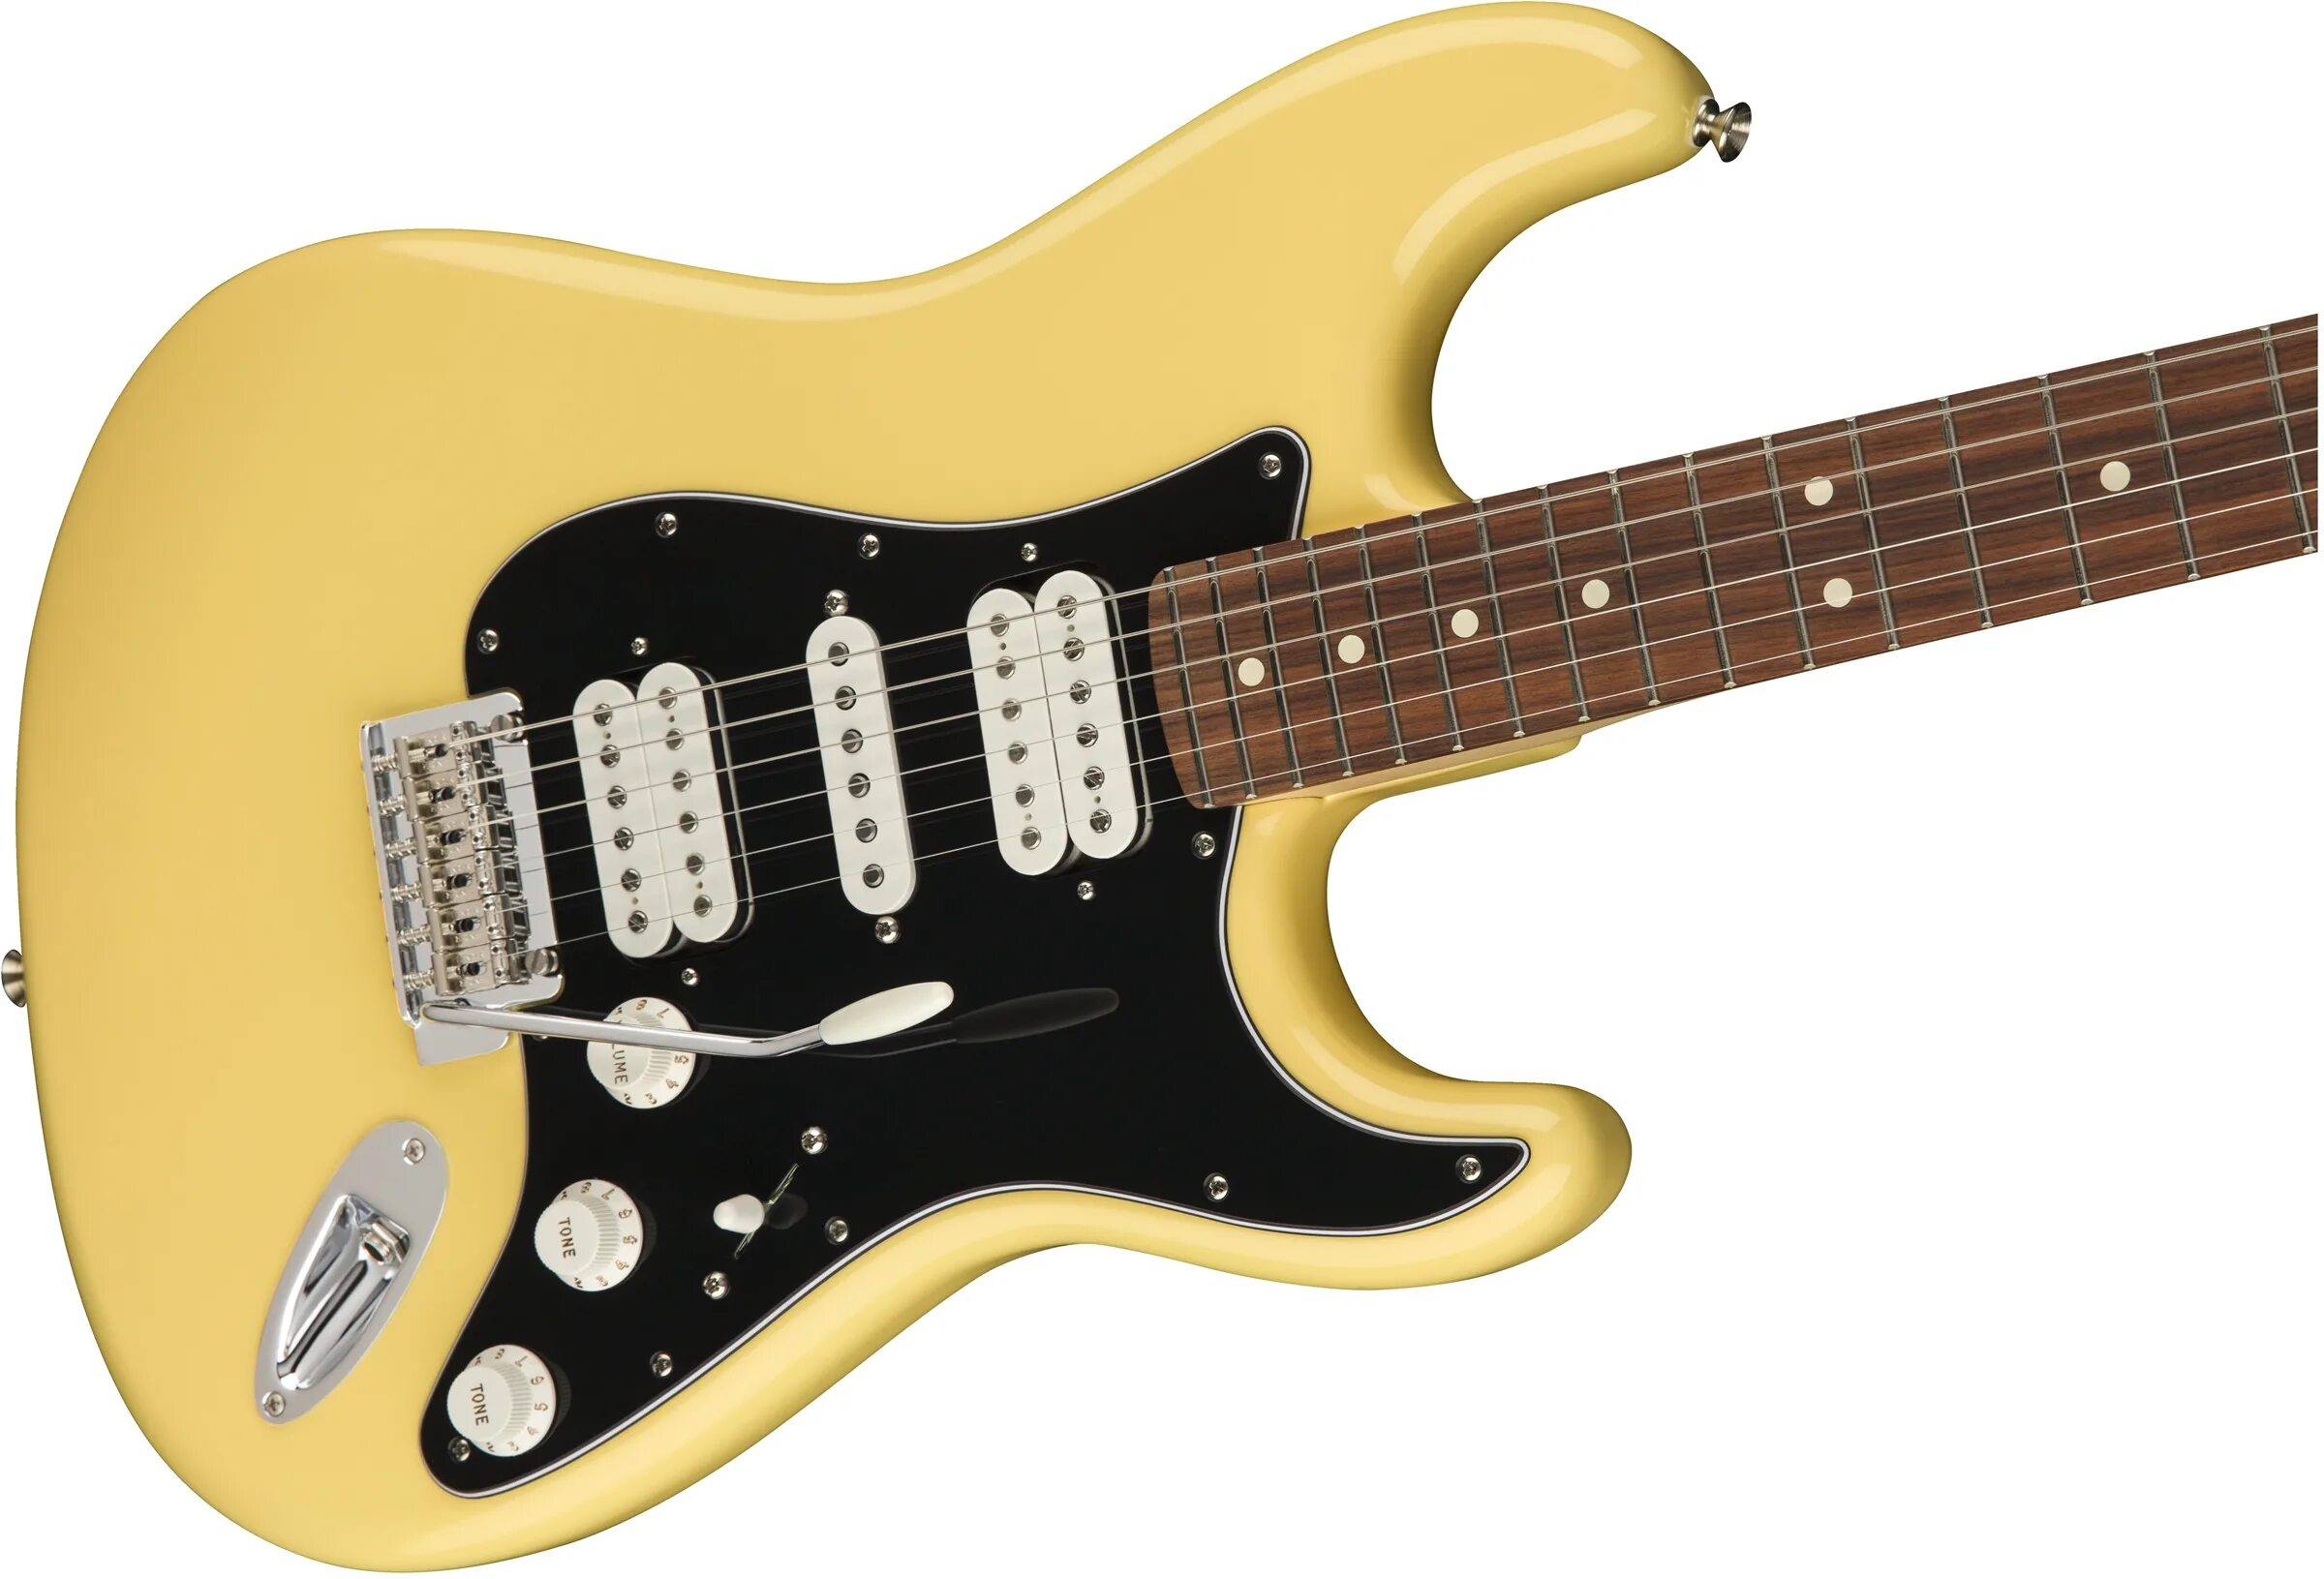 Squier contemp special. Гитара Fender Stratocaster. Электрогитара Fender Stratocaster желтая. Фендер стратокастер HSH. Электрогитара Fender Modern Player Stratocaster HSH.